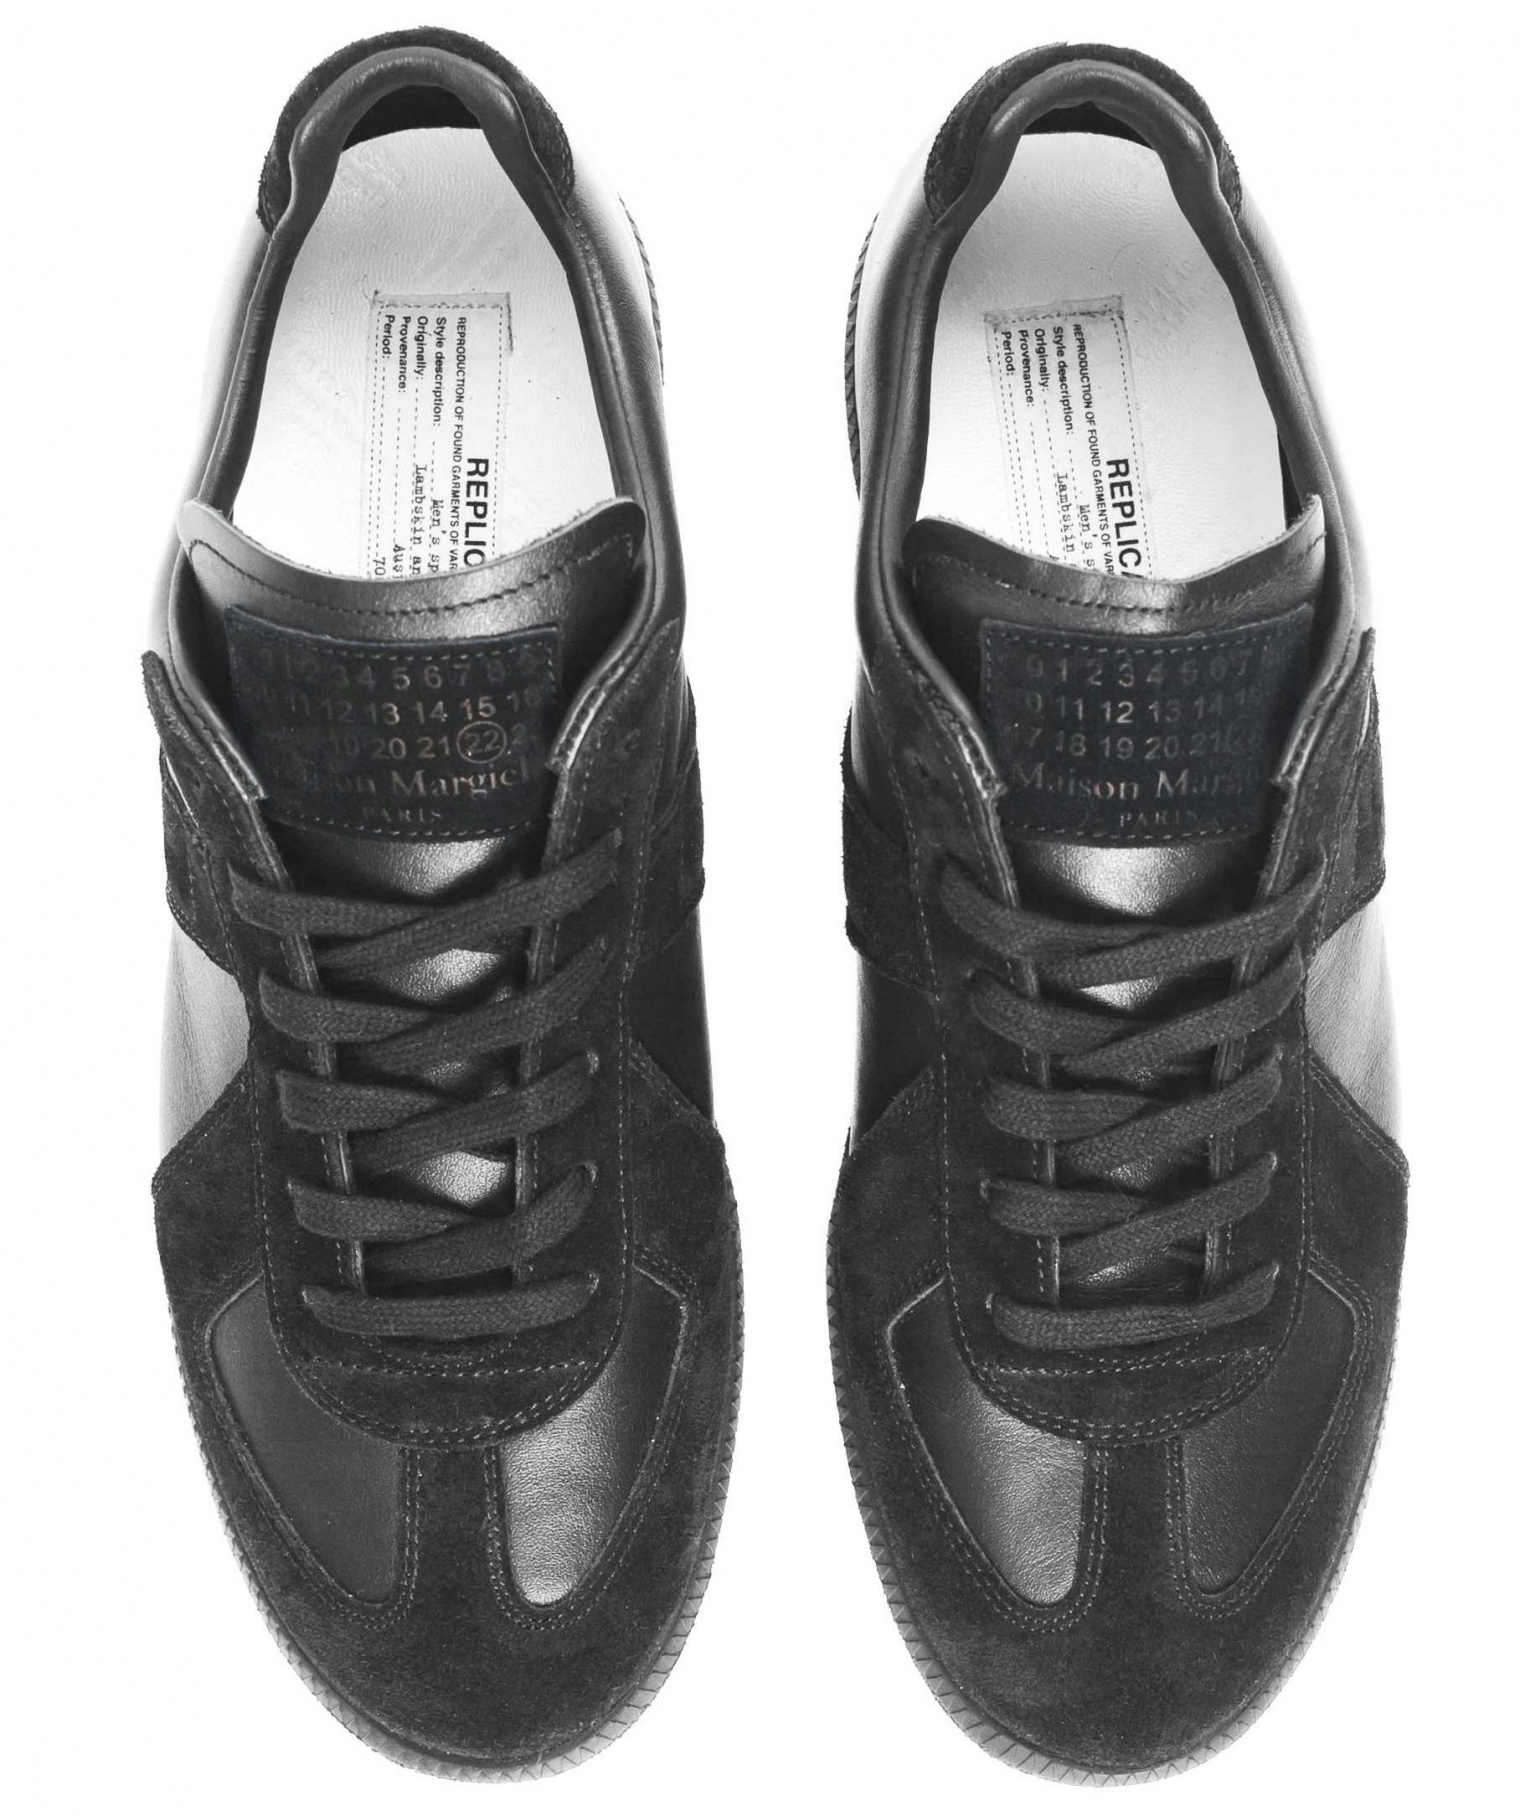 Maison Margiela Black Leather Replica Sneakers